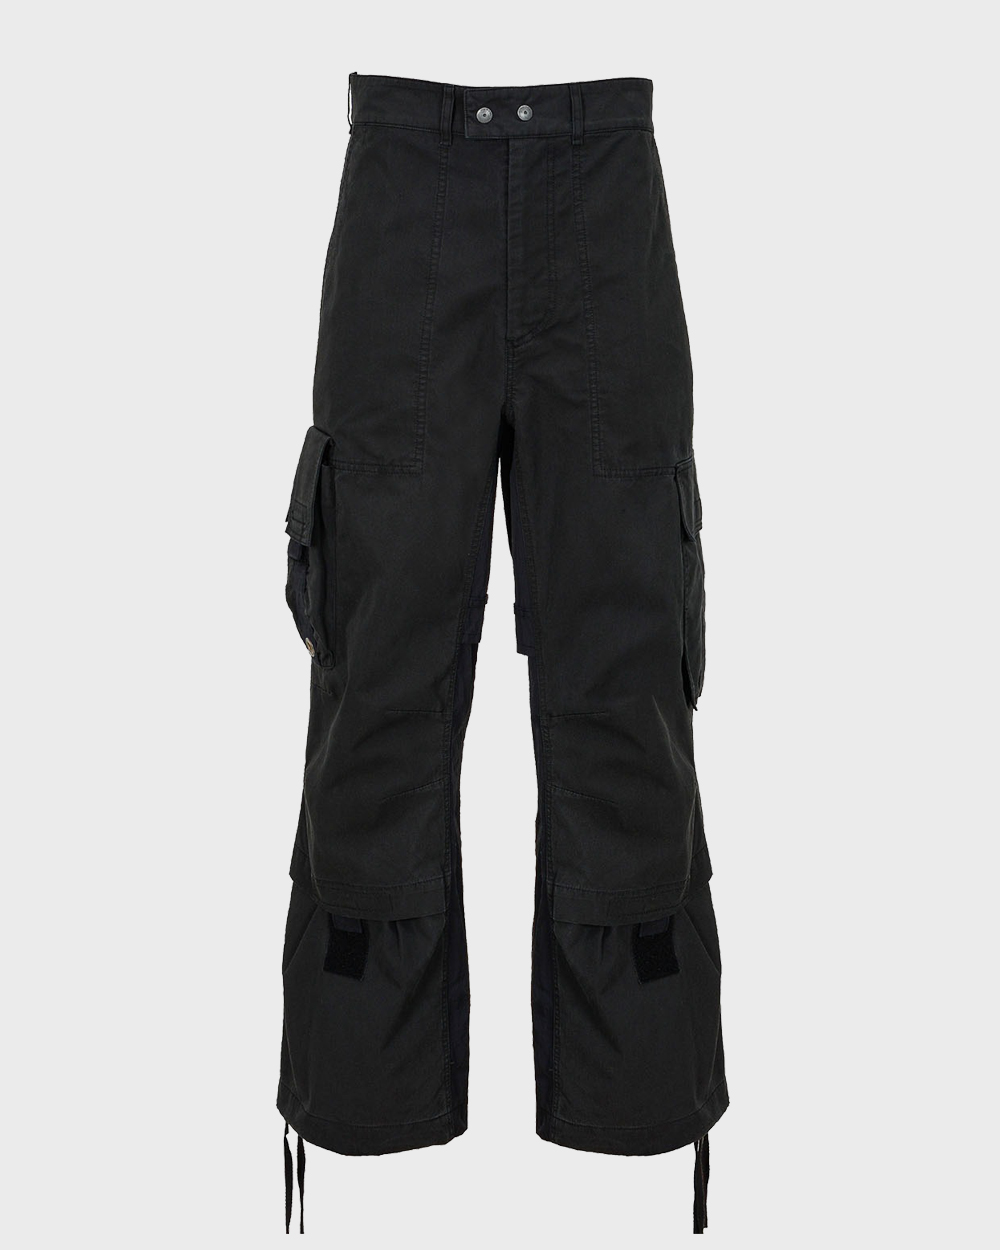 Military Cargo Pants (Black)